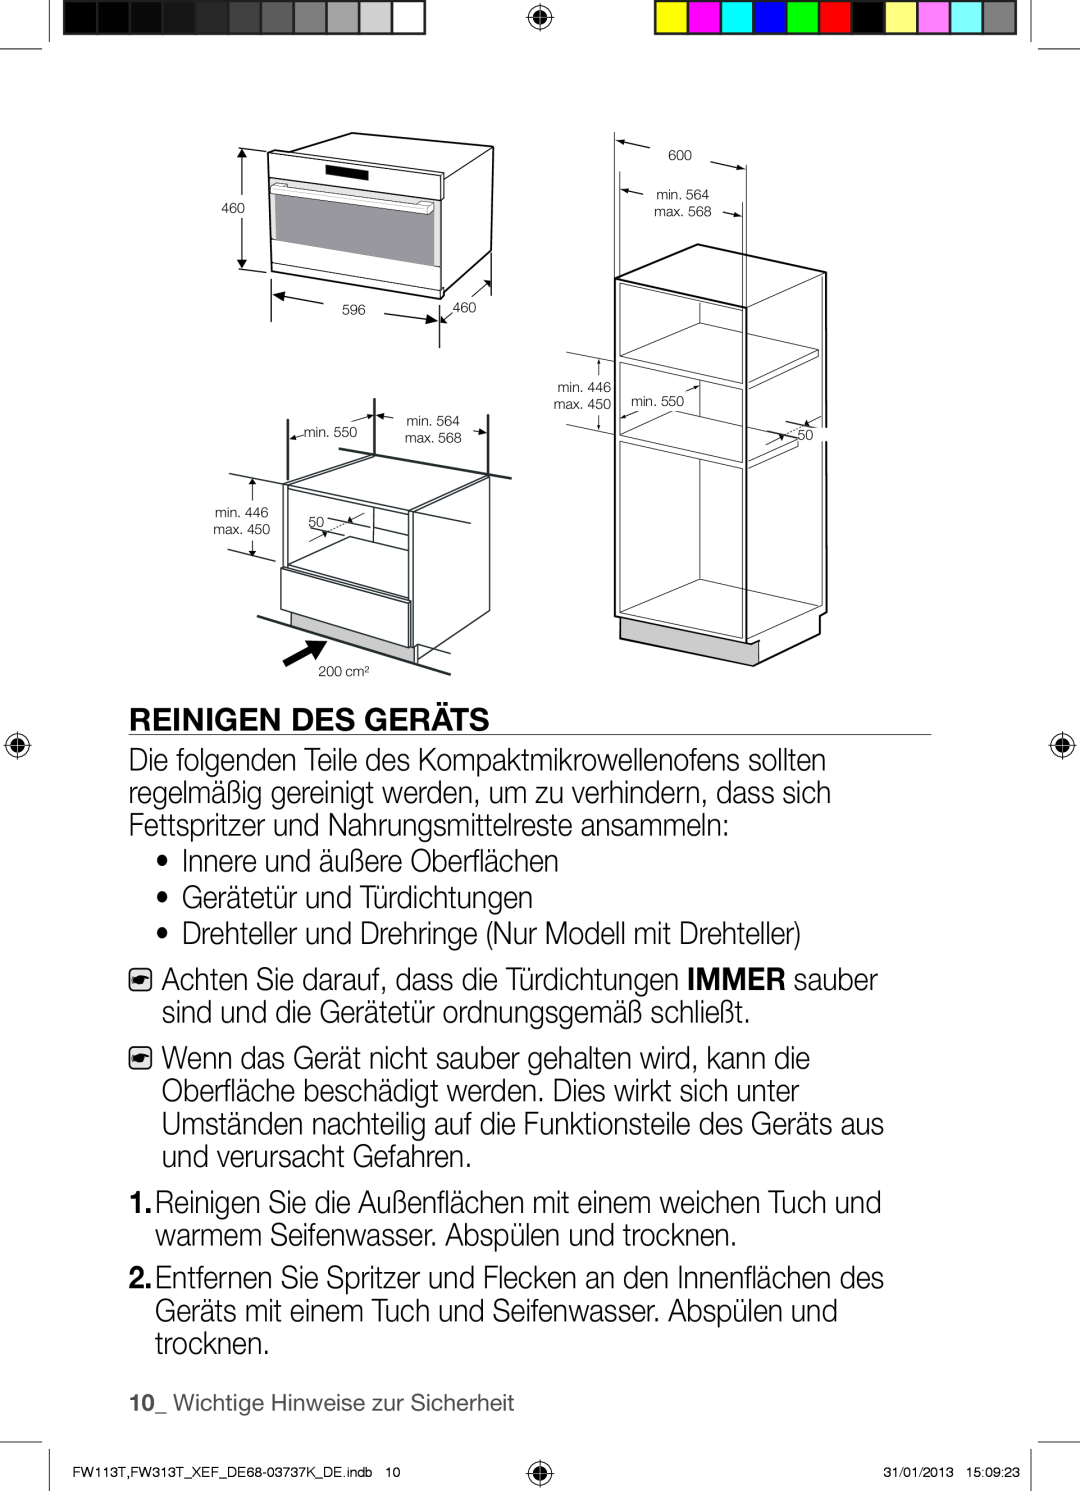 Samsung FW113T002/XEF manual Reinigen Des Geräts 